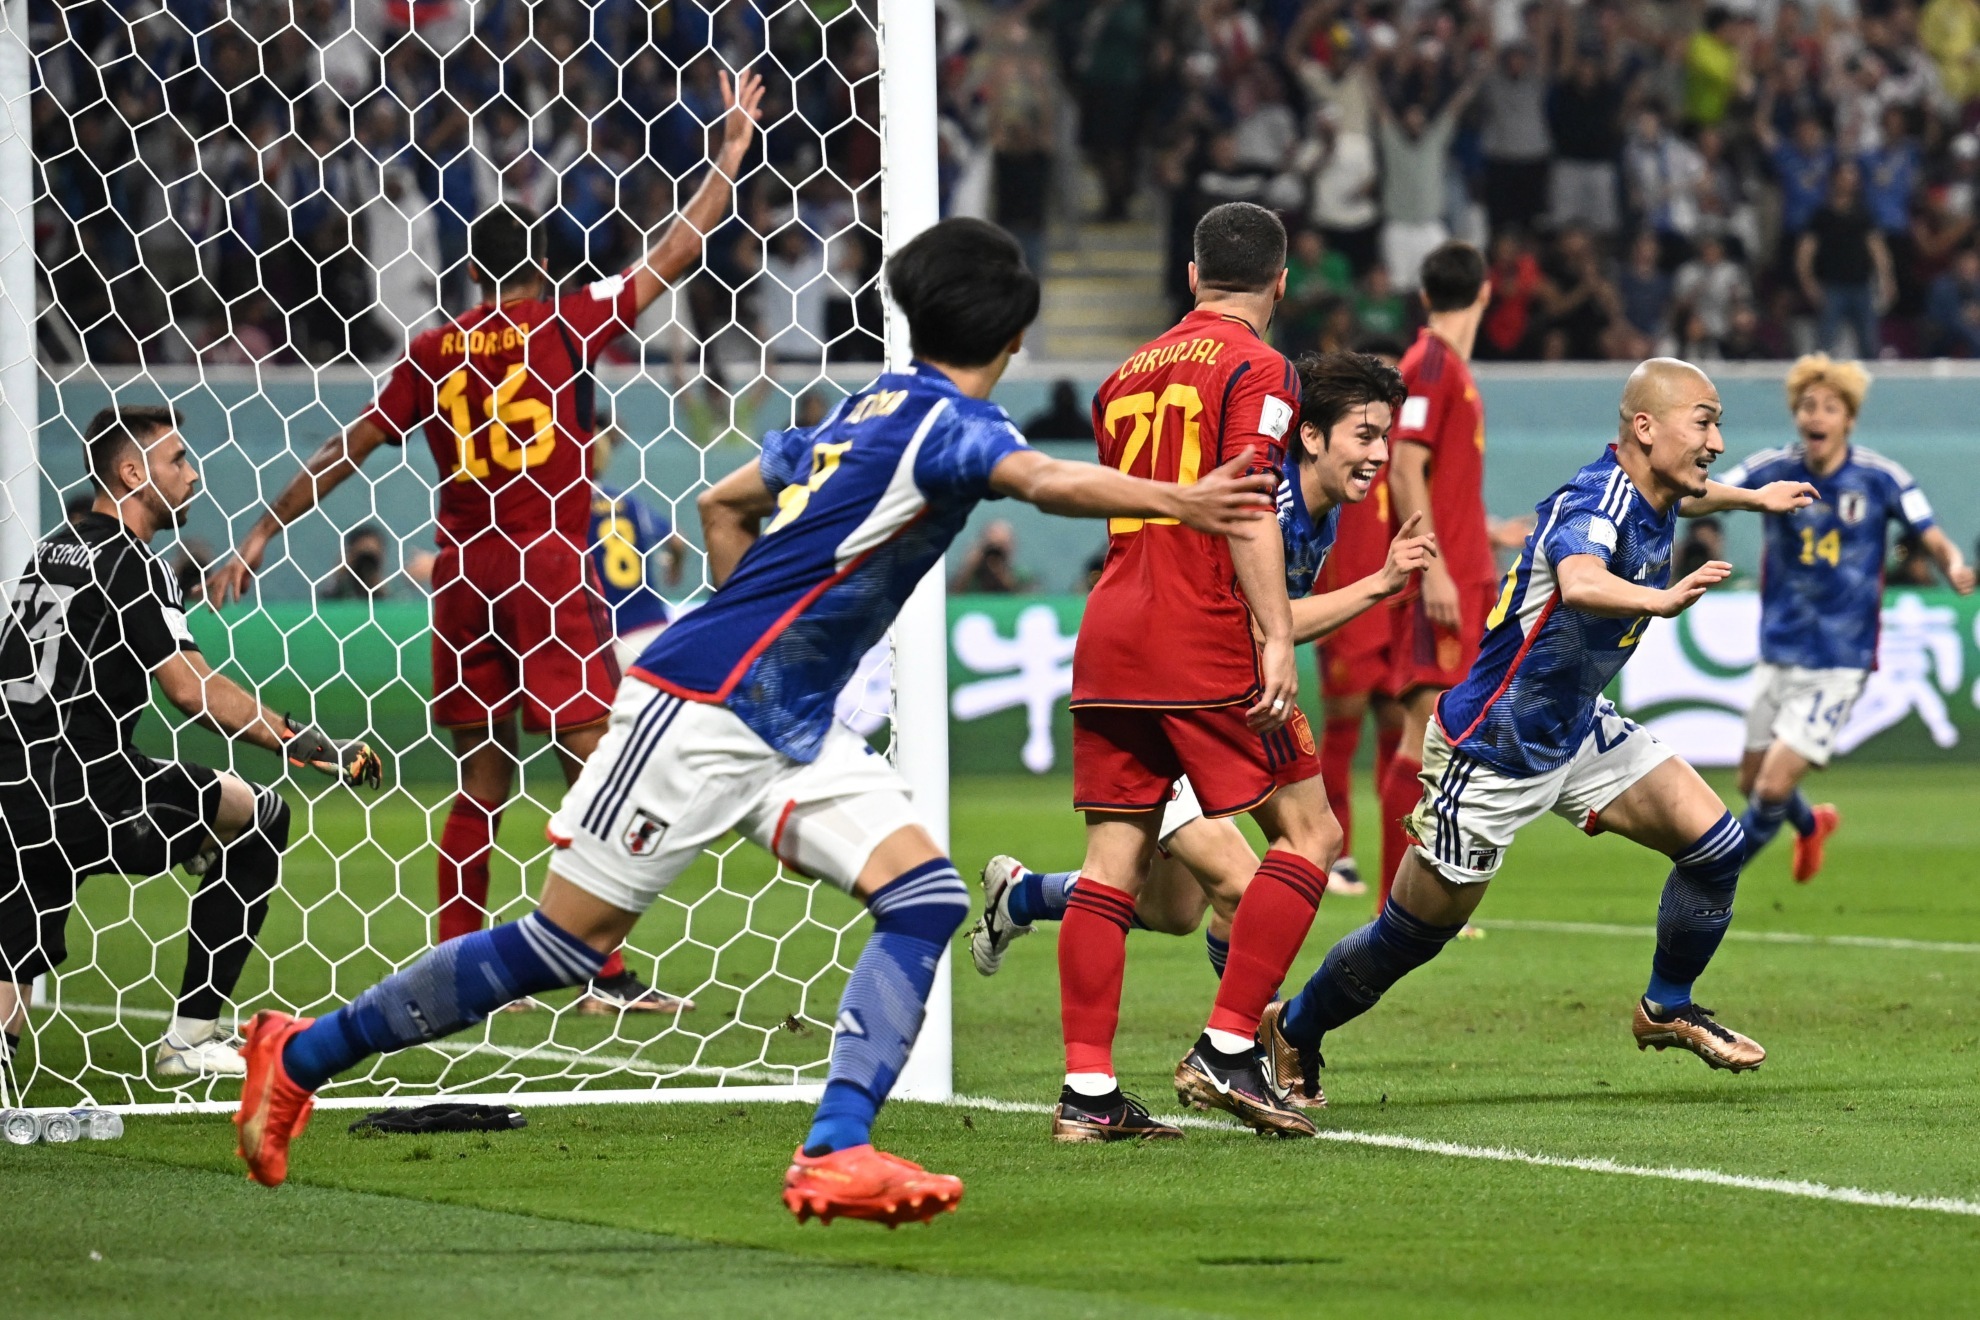 japon anota un gol que parece abandono la cancha